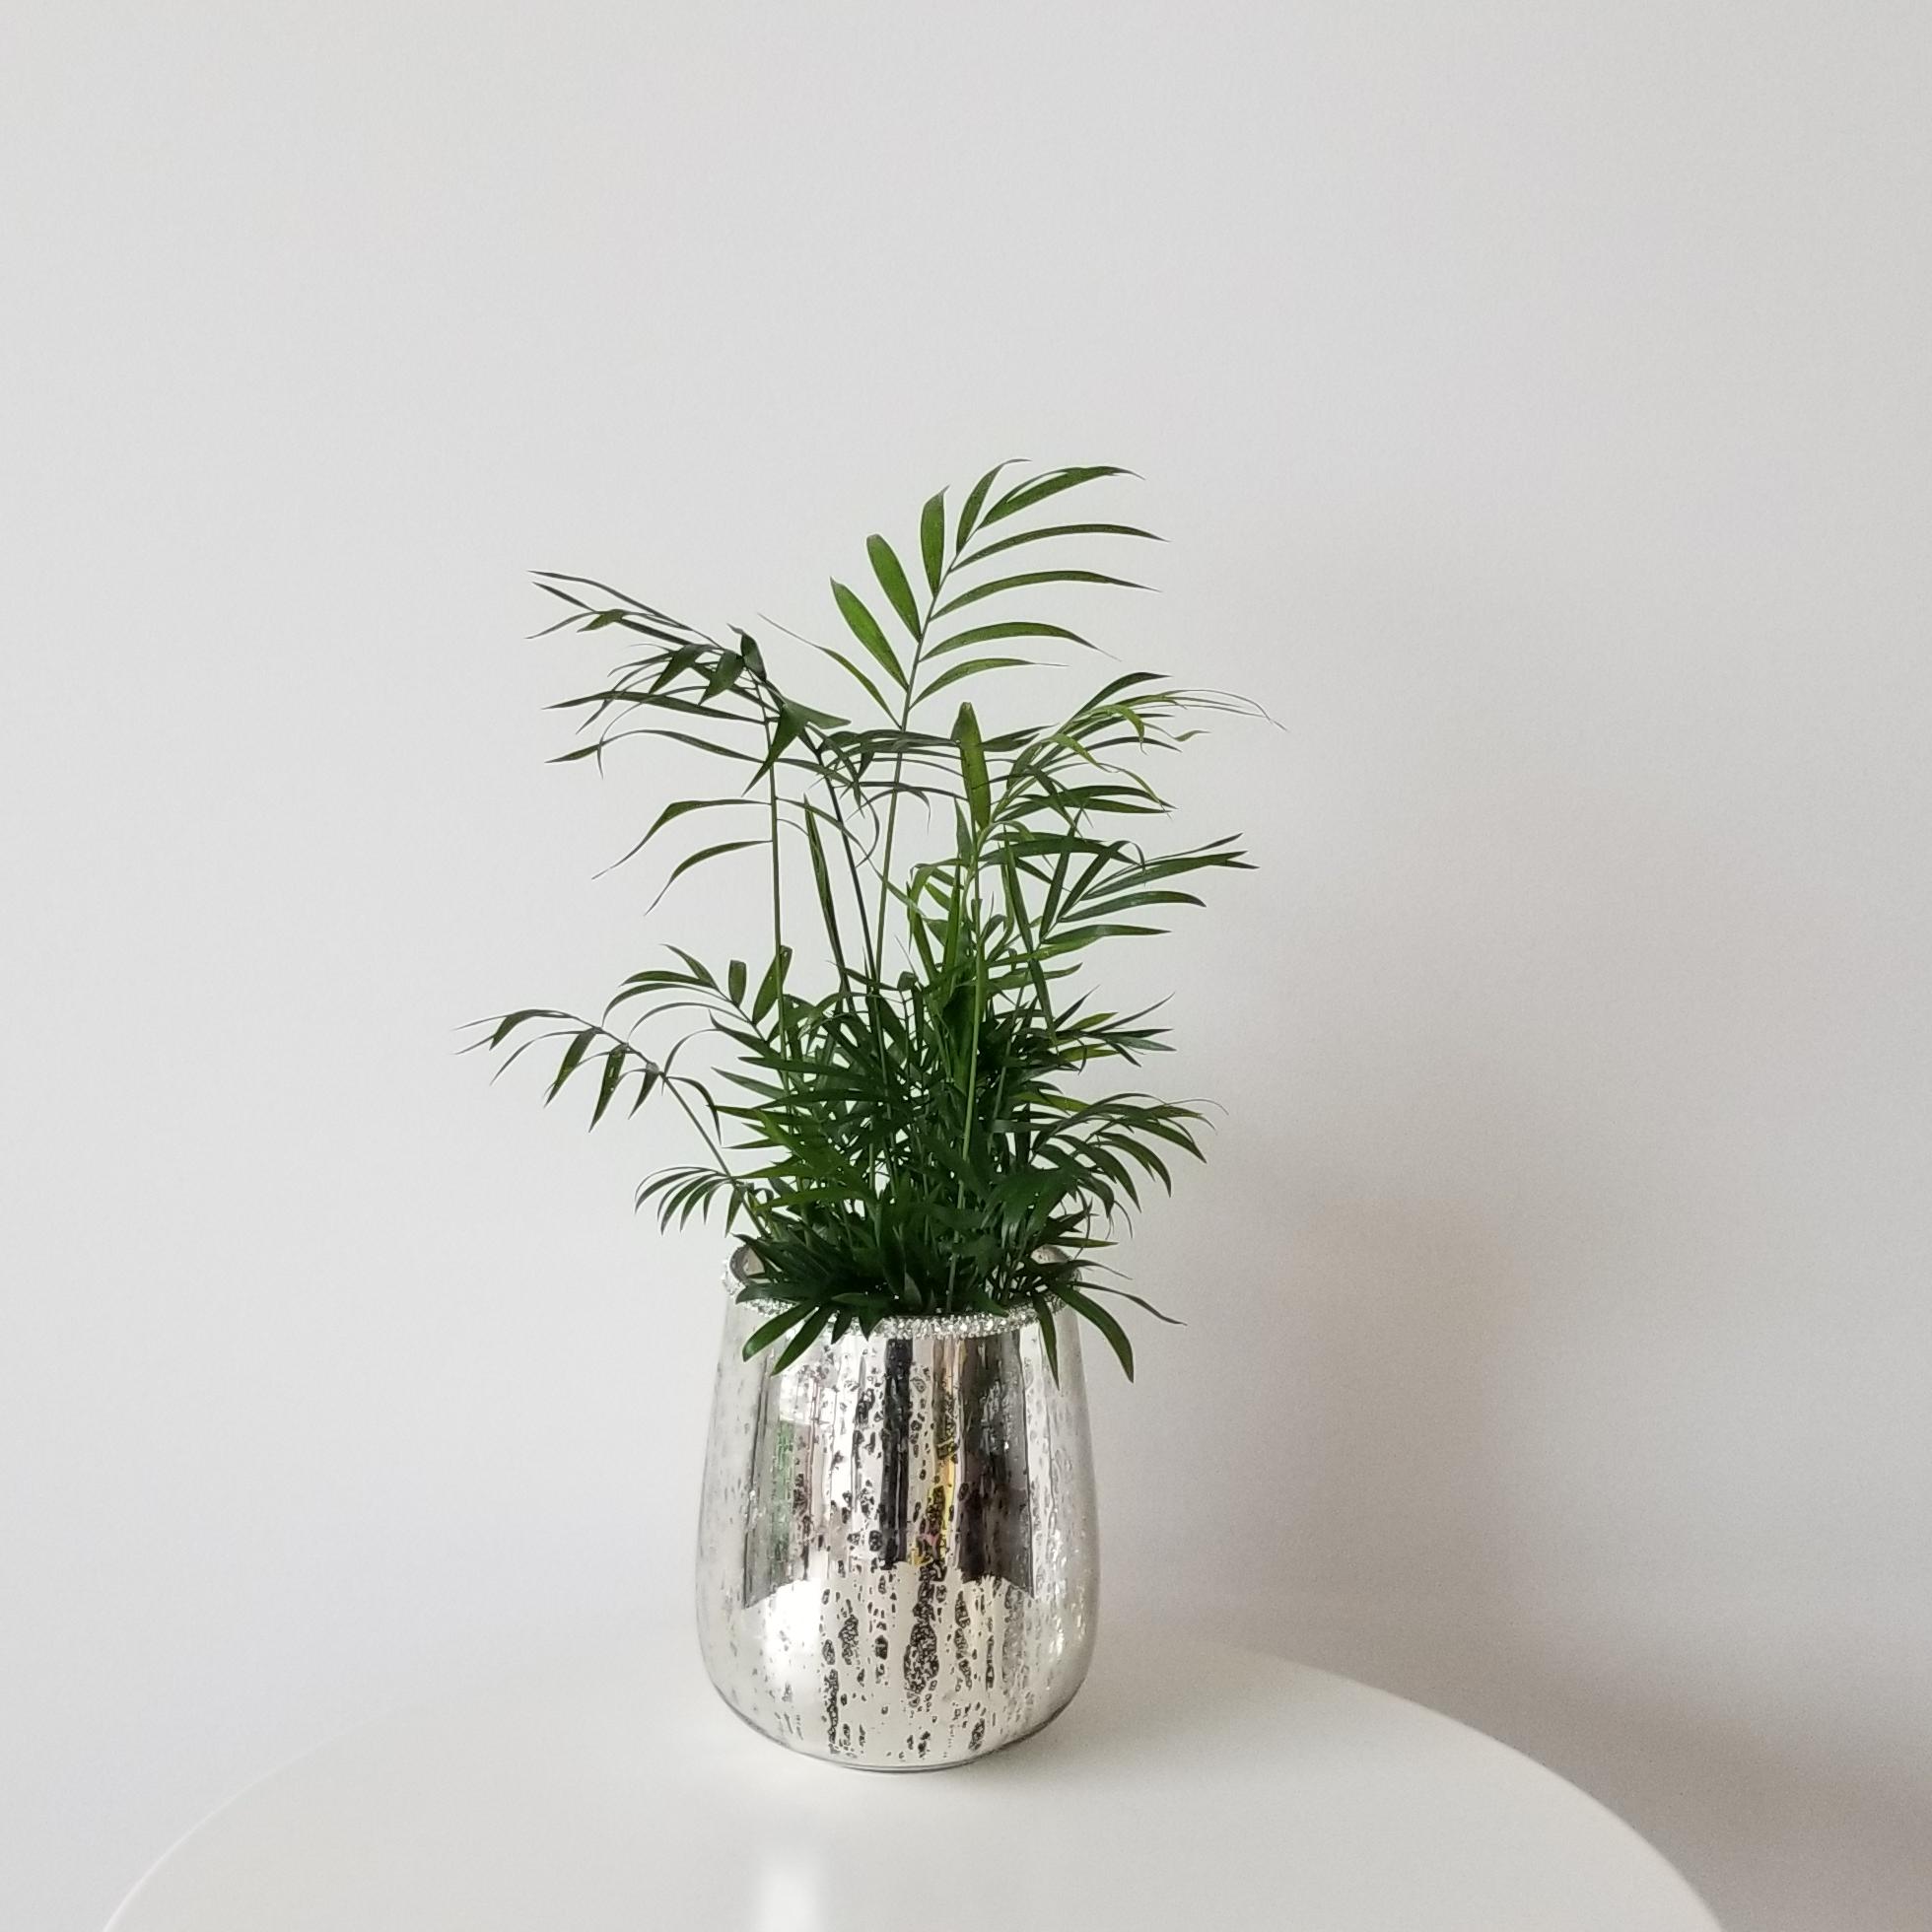 Parlour palm in decorative glass container vase for indoor plants flowers home decor Toronto Mississauga Brampton Oakville Burlington Etobicoke other GTA areas